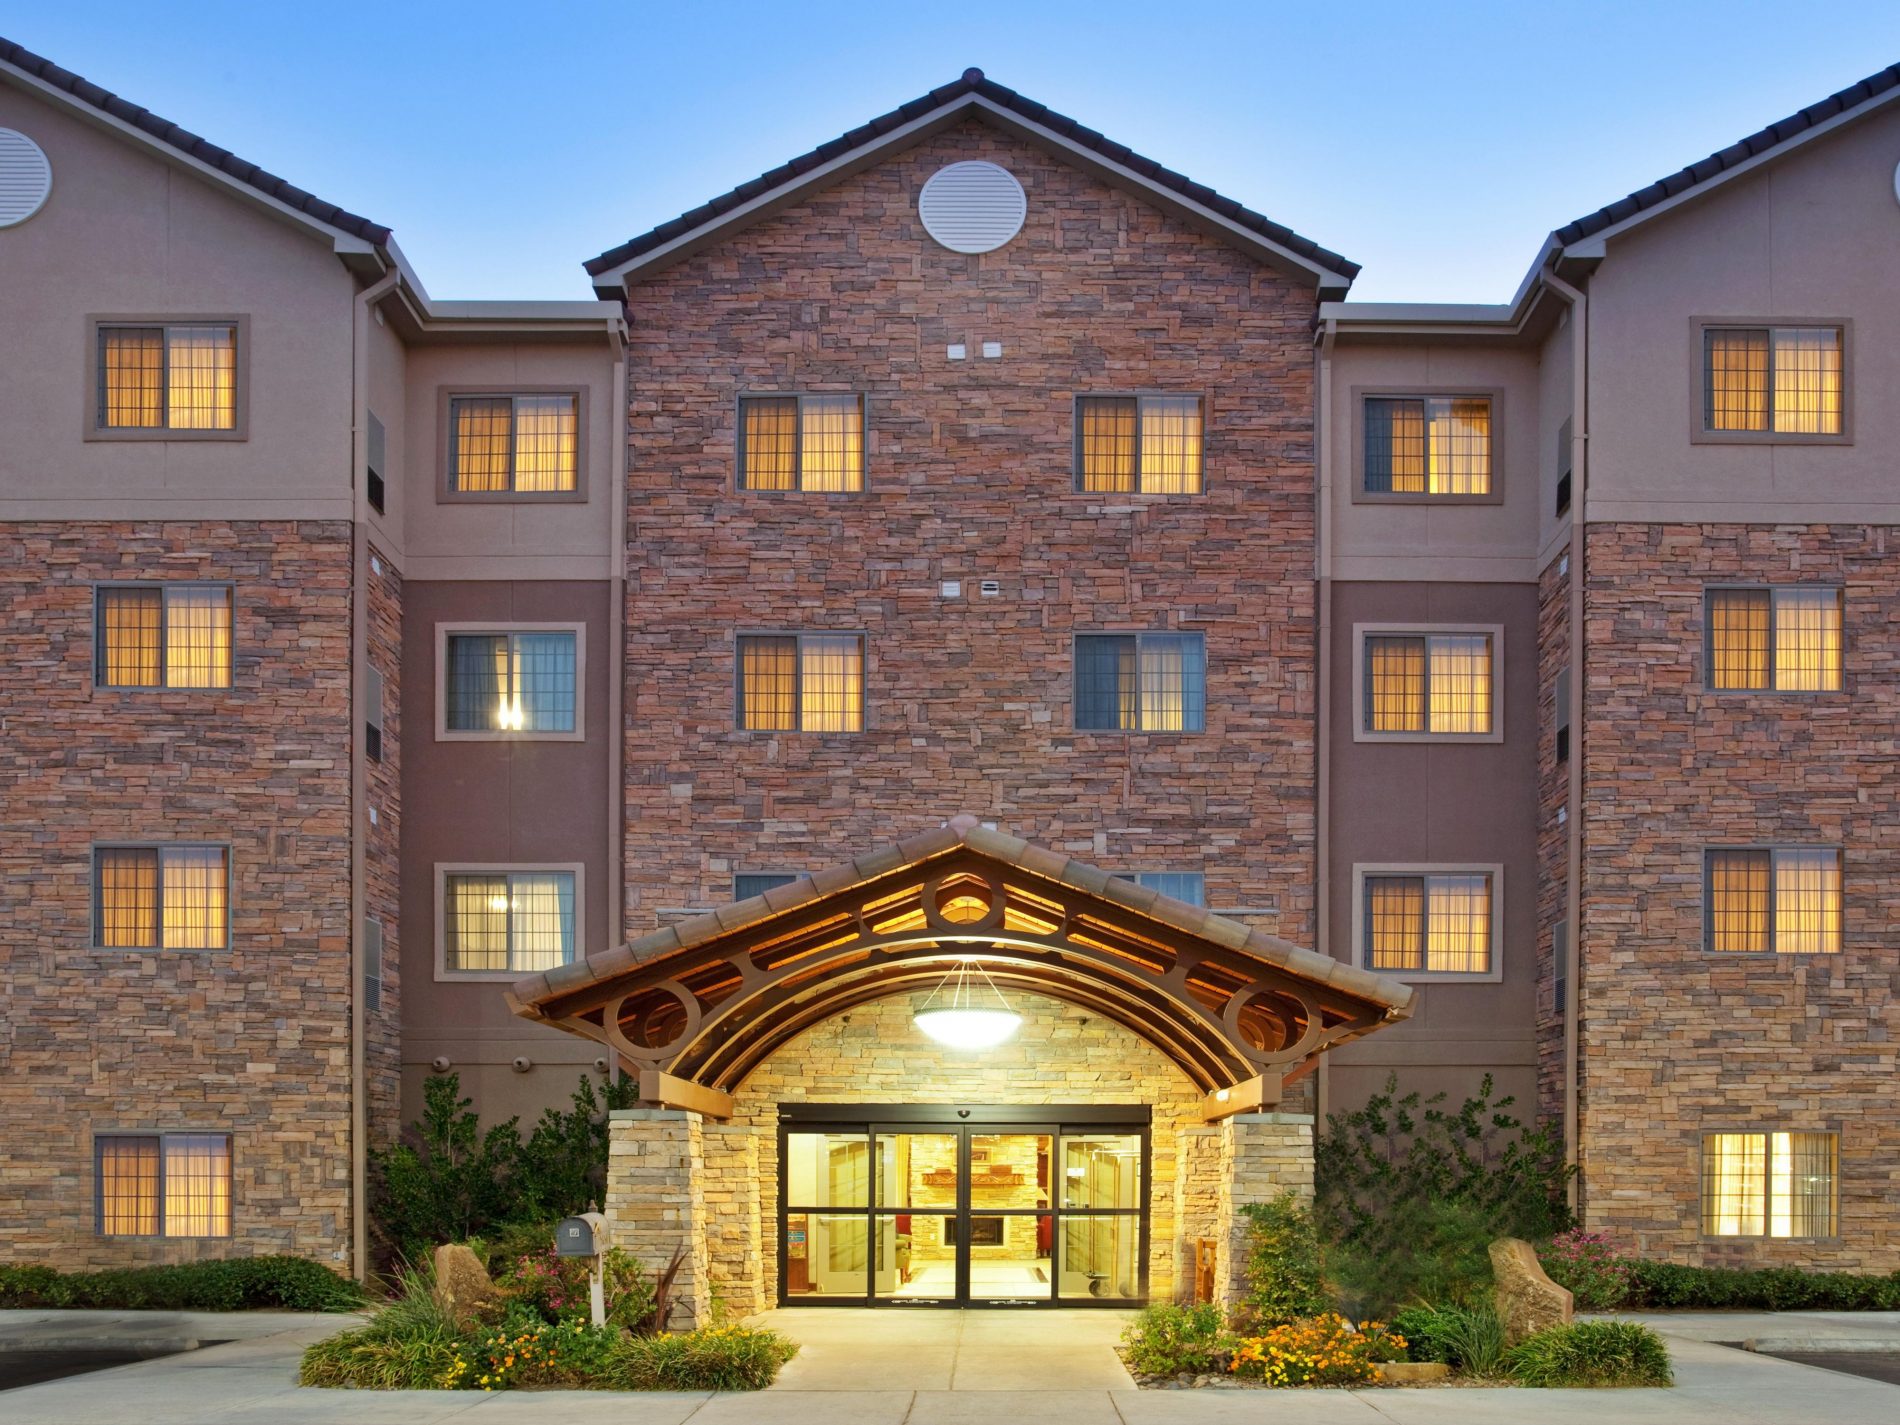 IHG Intercontinental Hotel Groups Staybridge Suites, Las Cruces, New Mexico